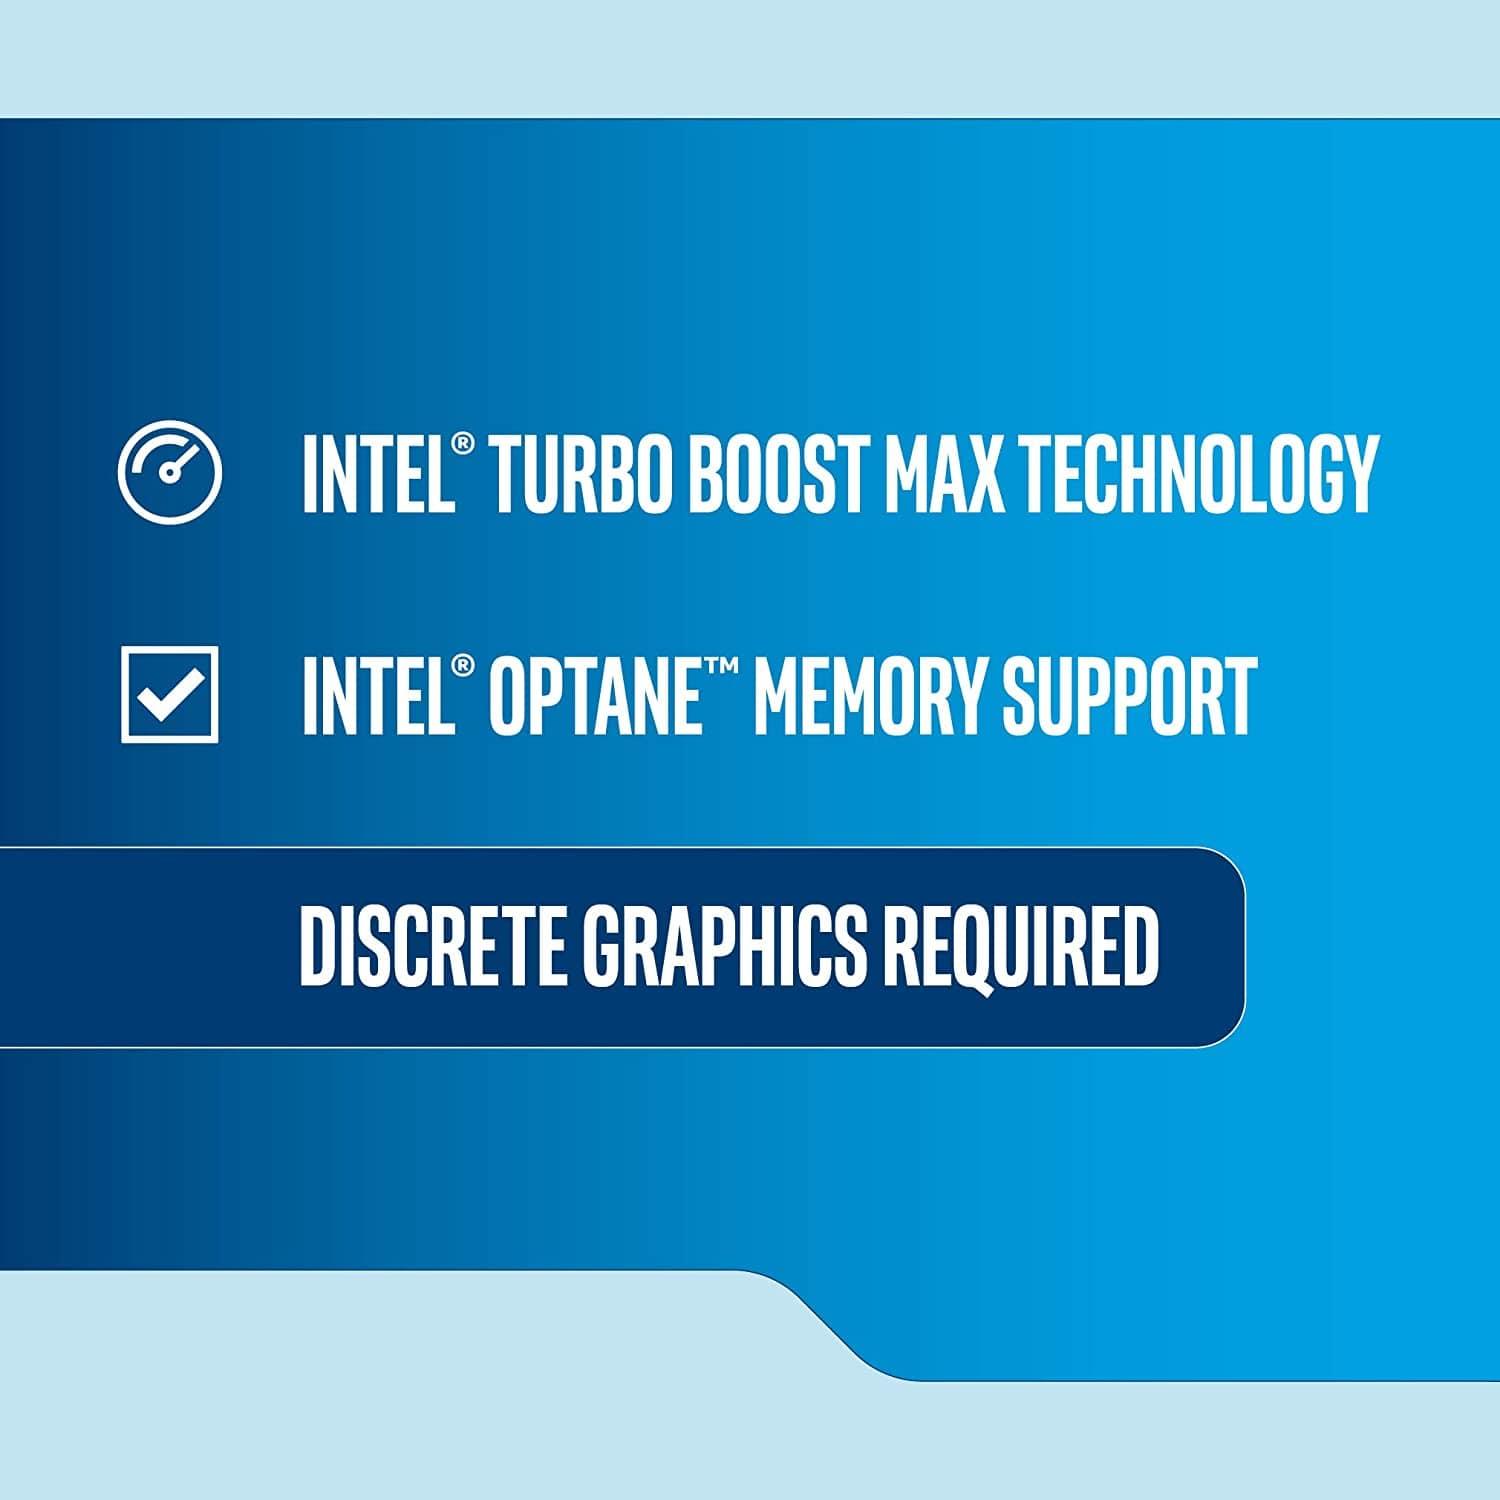 Intel® Core™ i5-9400F Processor (9M Cache, up to 4.10 GHz)-Processor-dealsplant